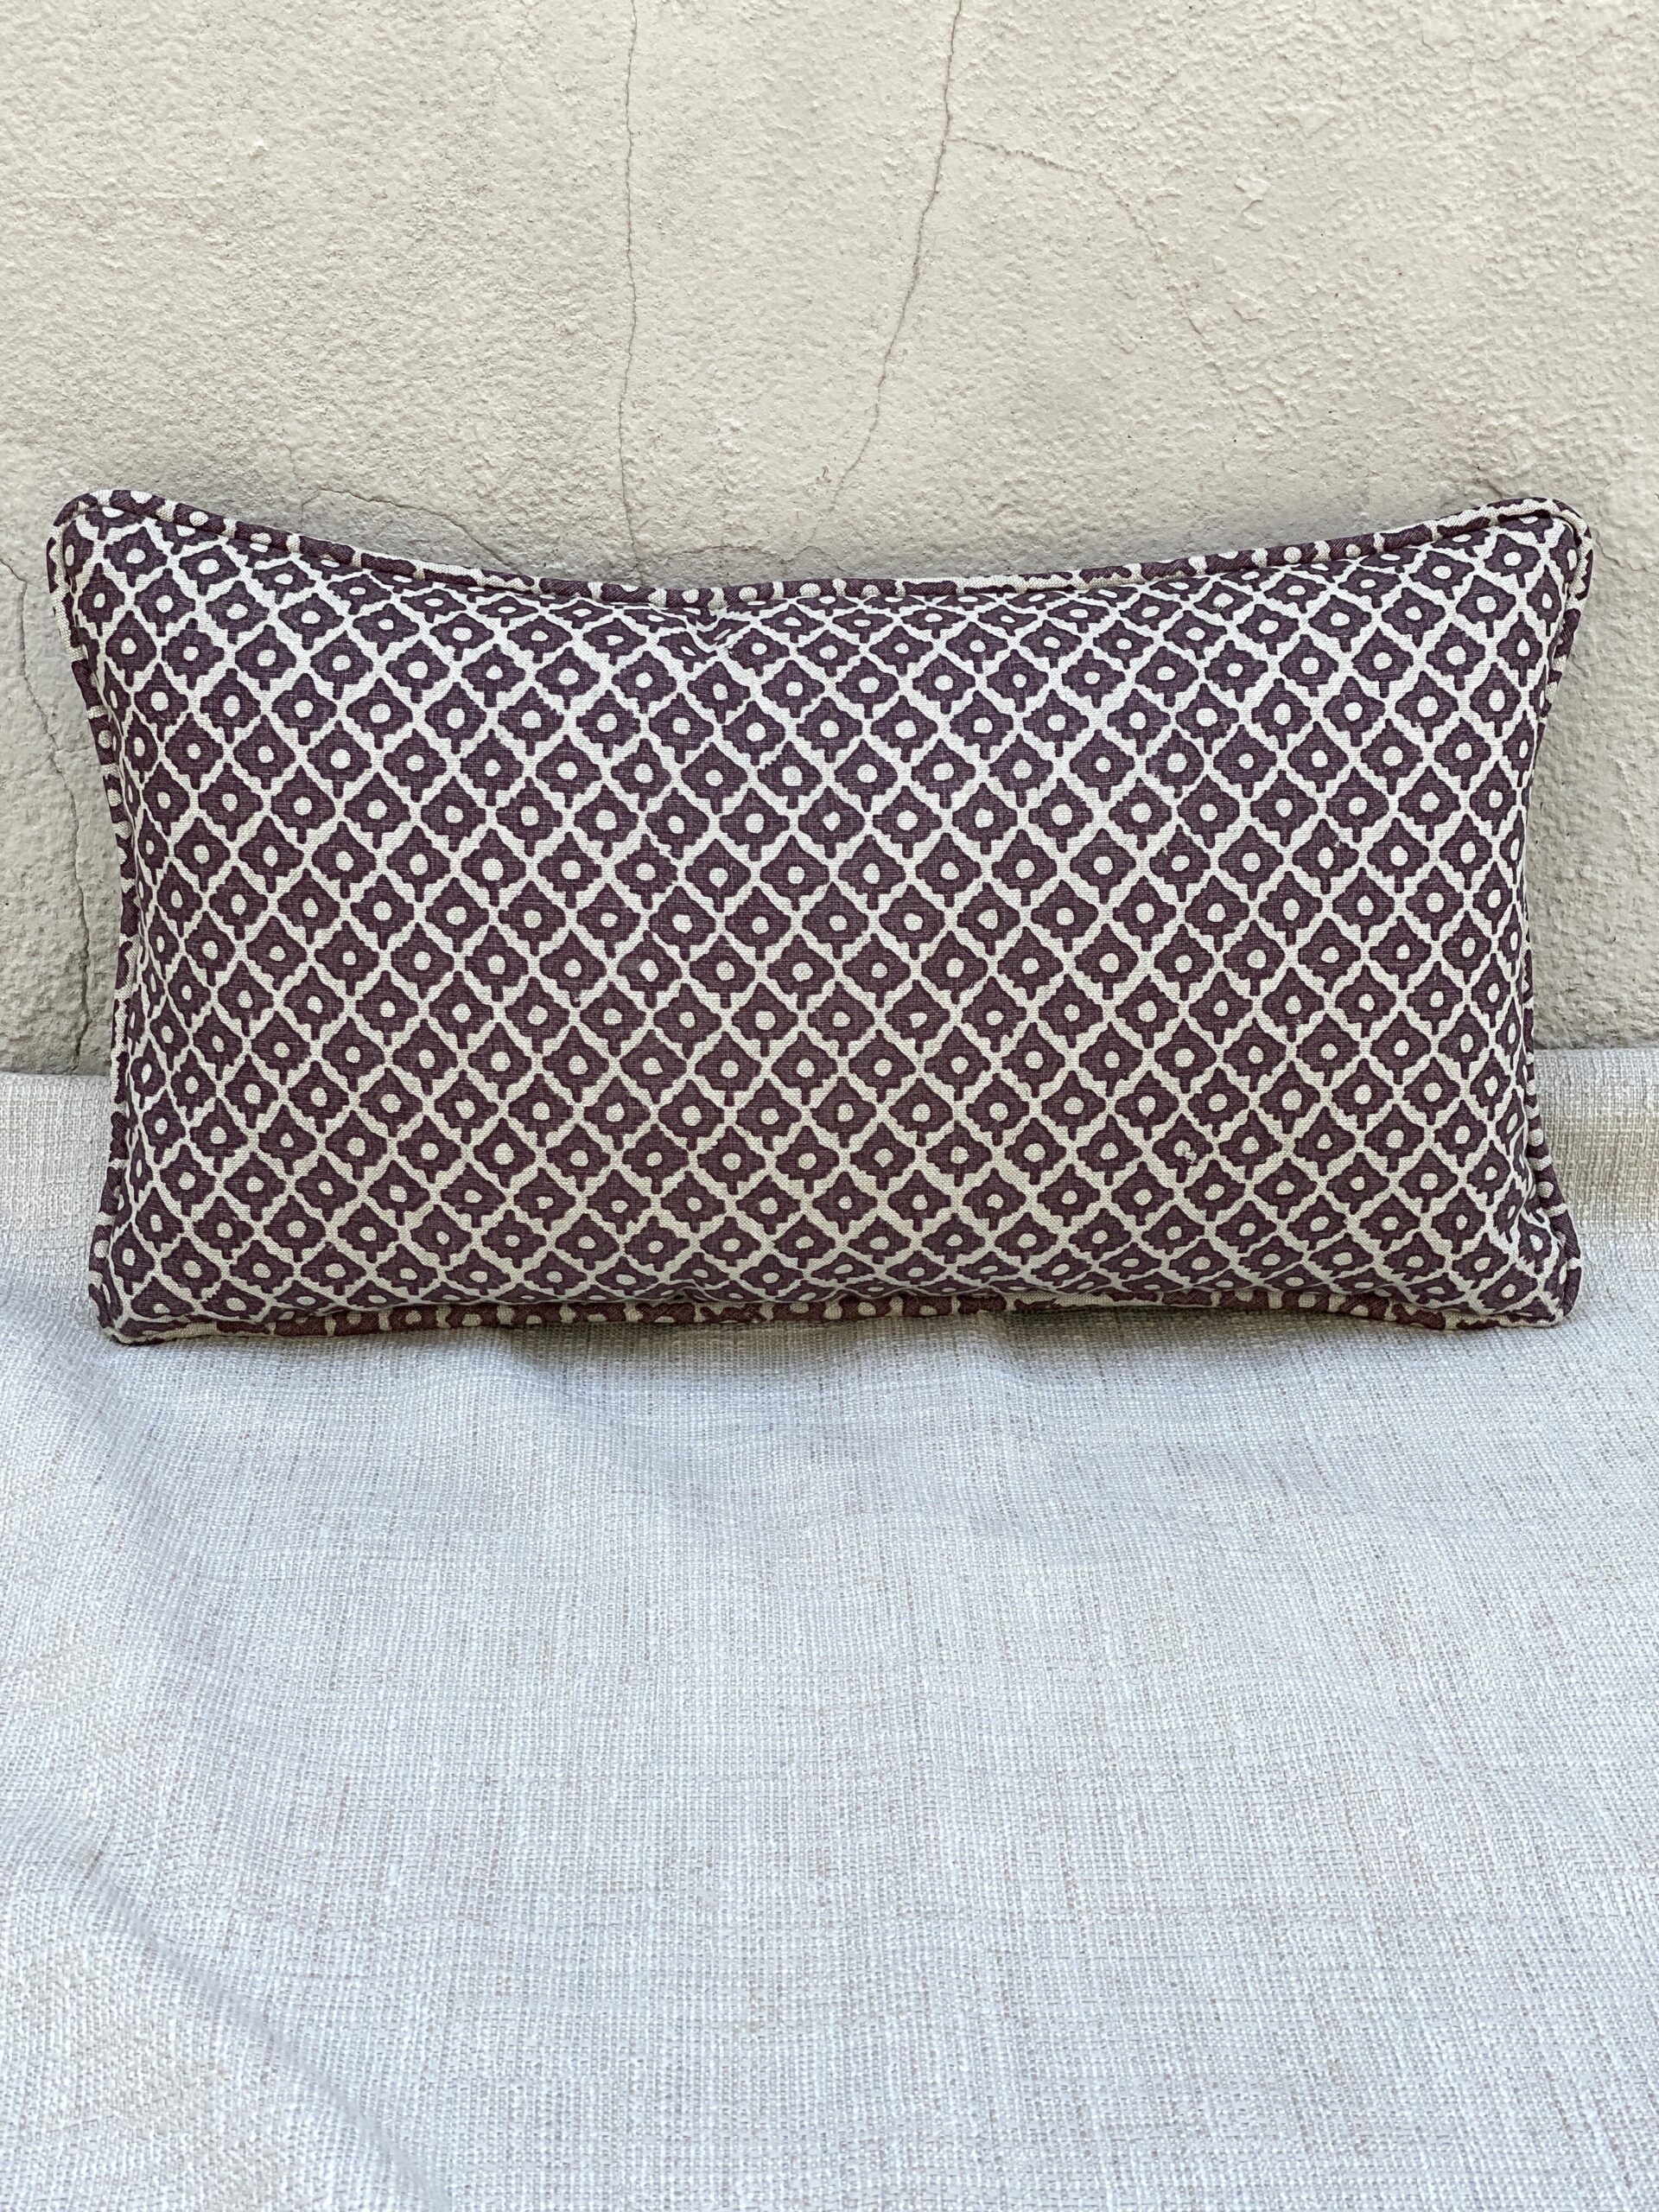 Anna French Petit Arbre Pillows